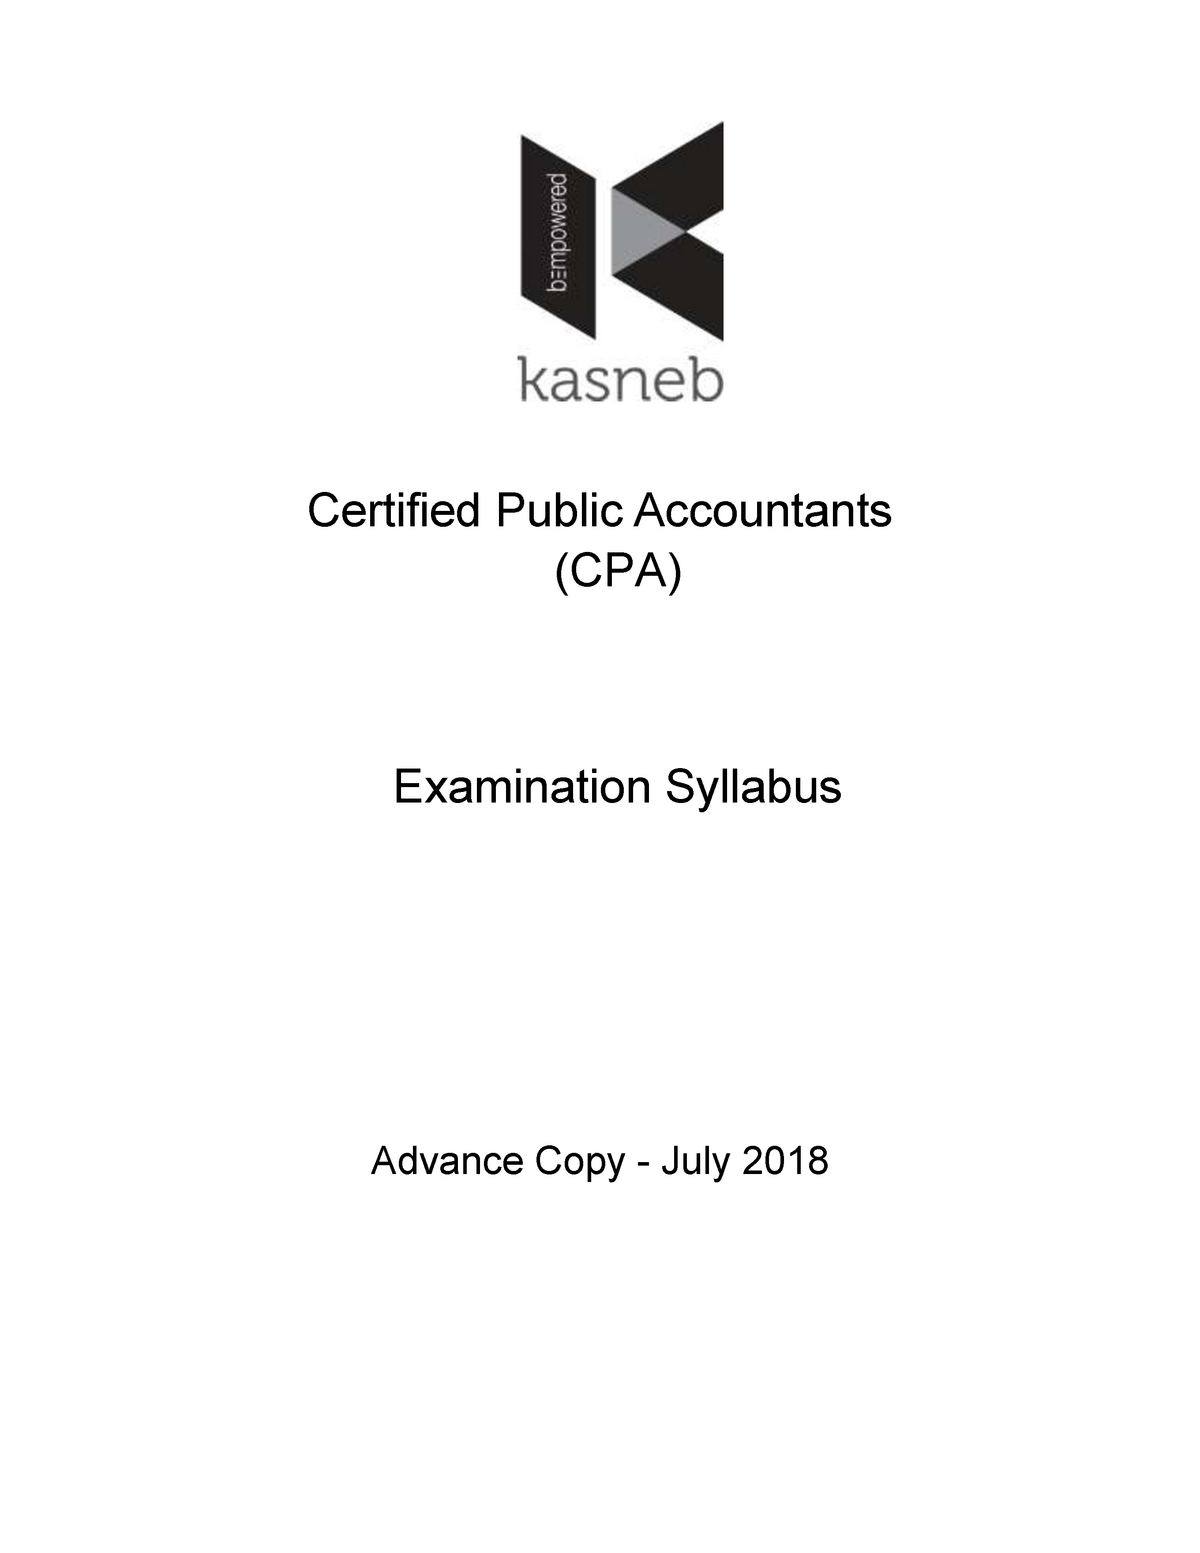 Cpa syllabus Certified Public Accountants (CPA) Examination Syllabus